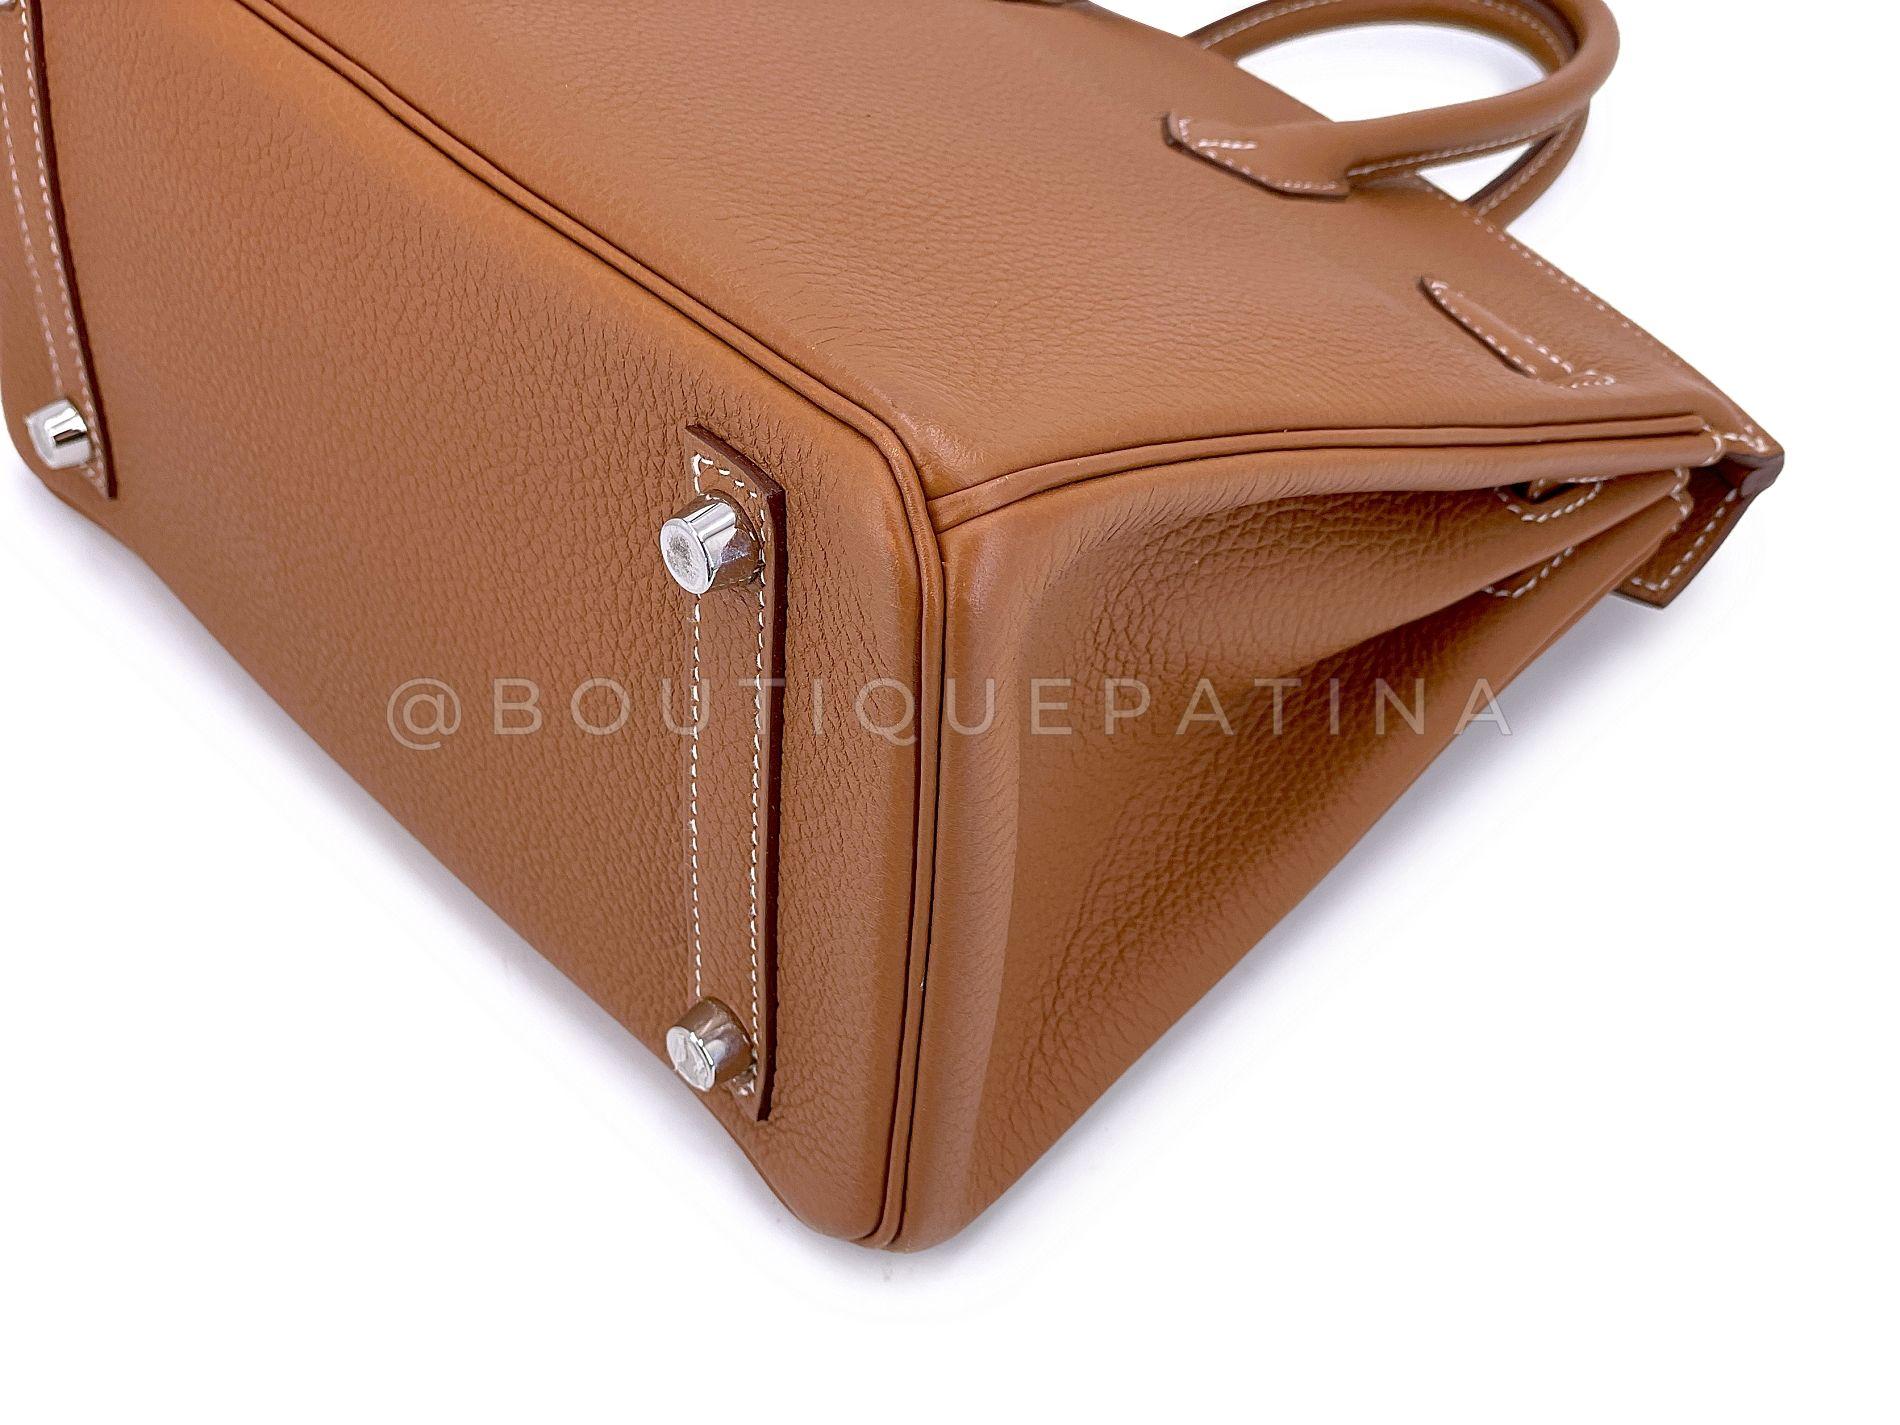 Hermès Gold Togo Birkin 25cm Tote Bag PHW 67913 For Sale 7